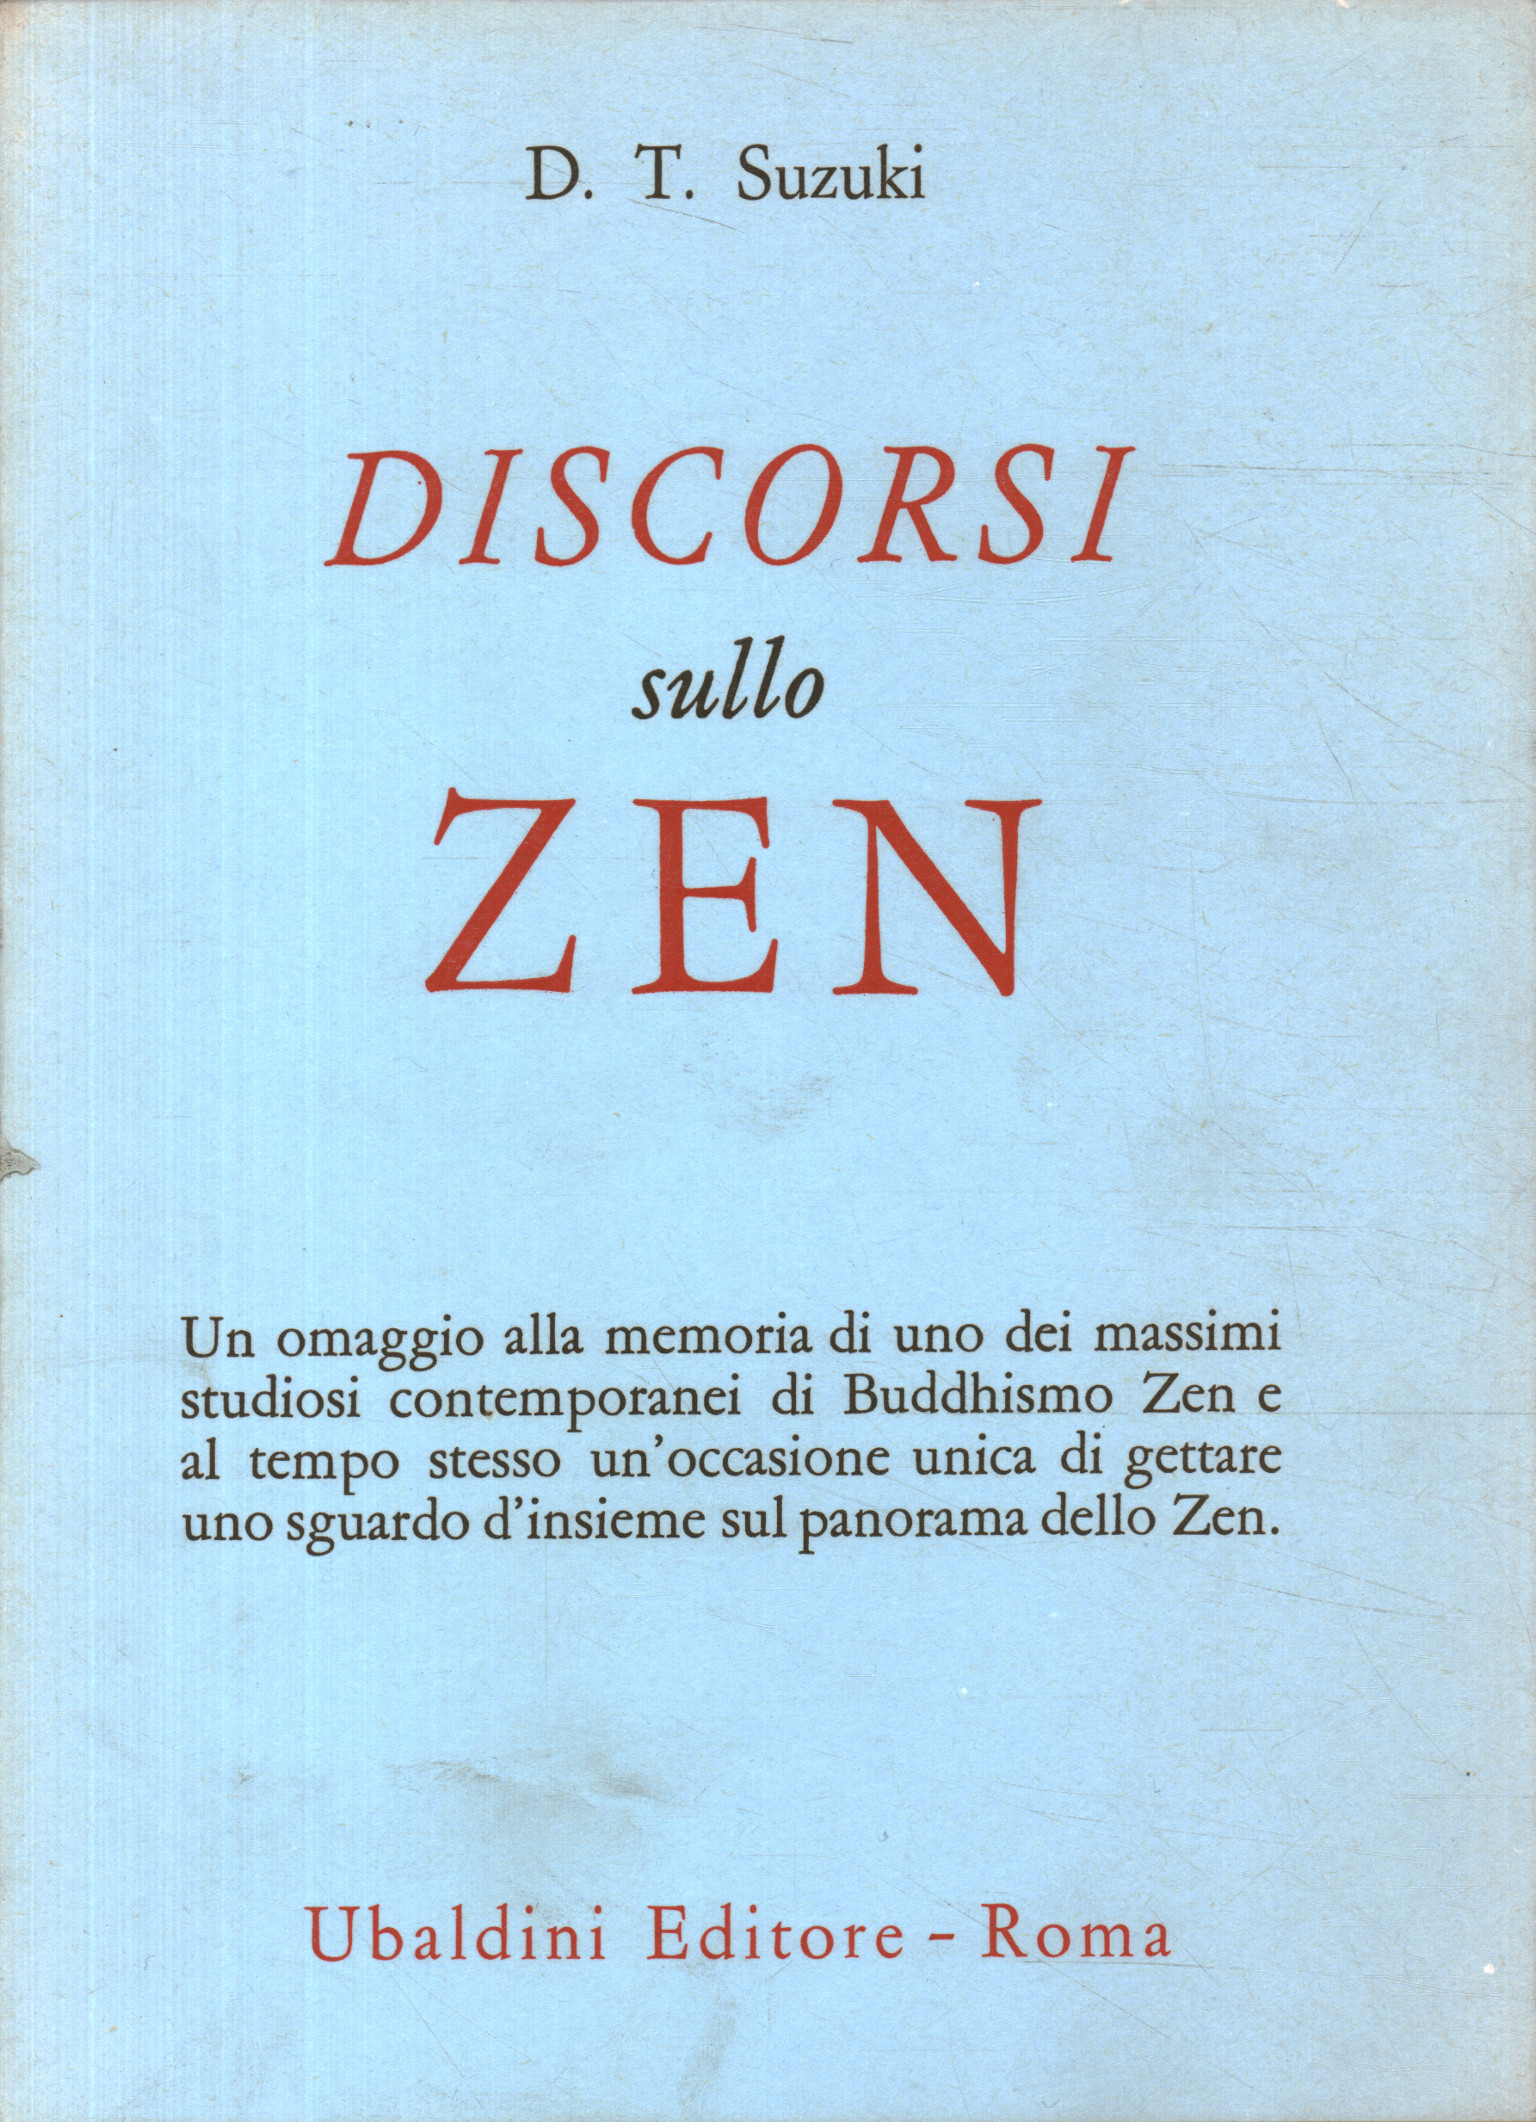 Discourses on Zen